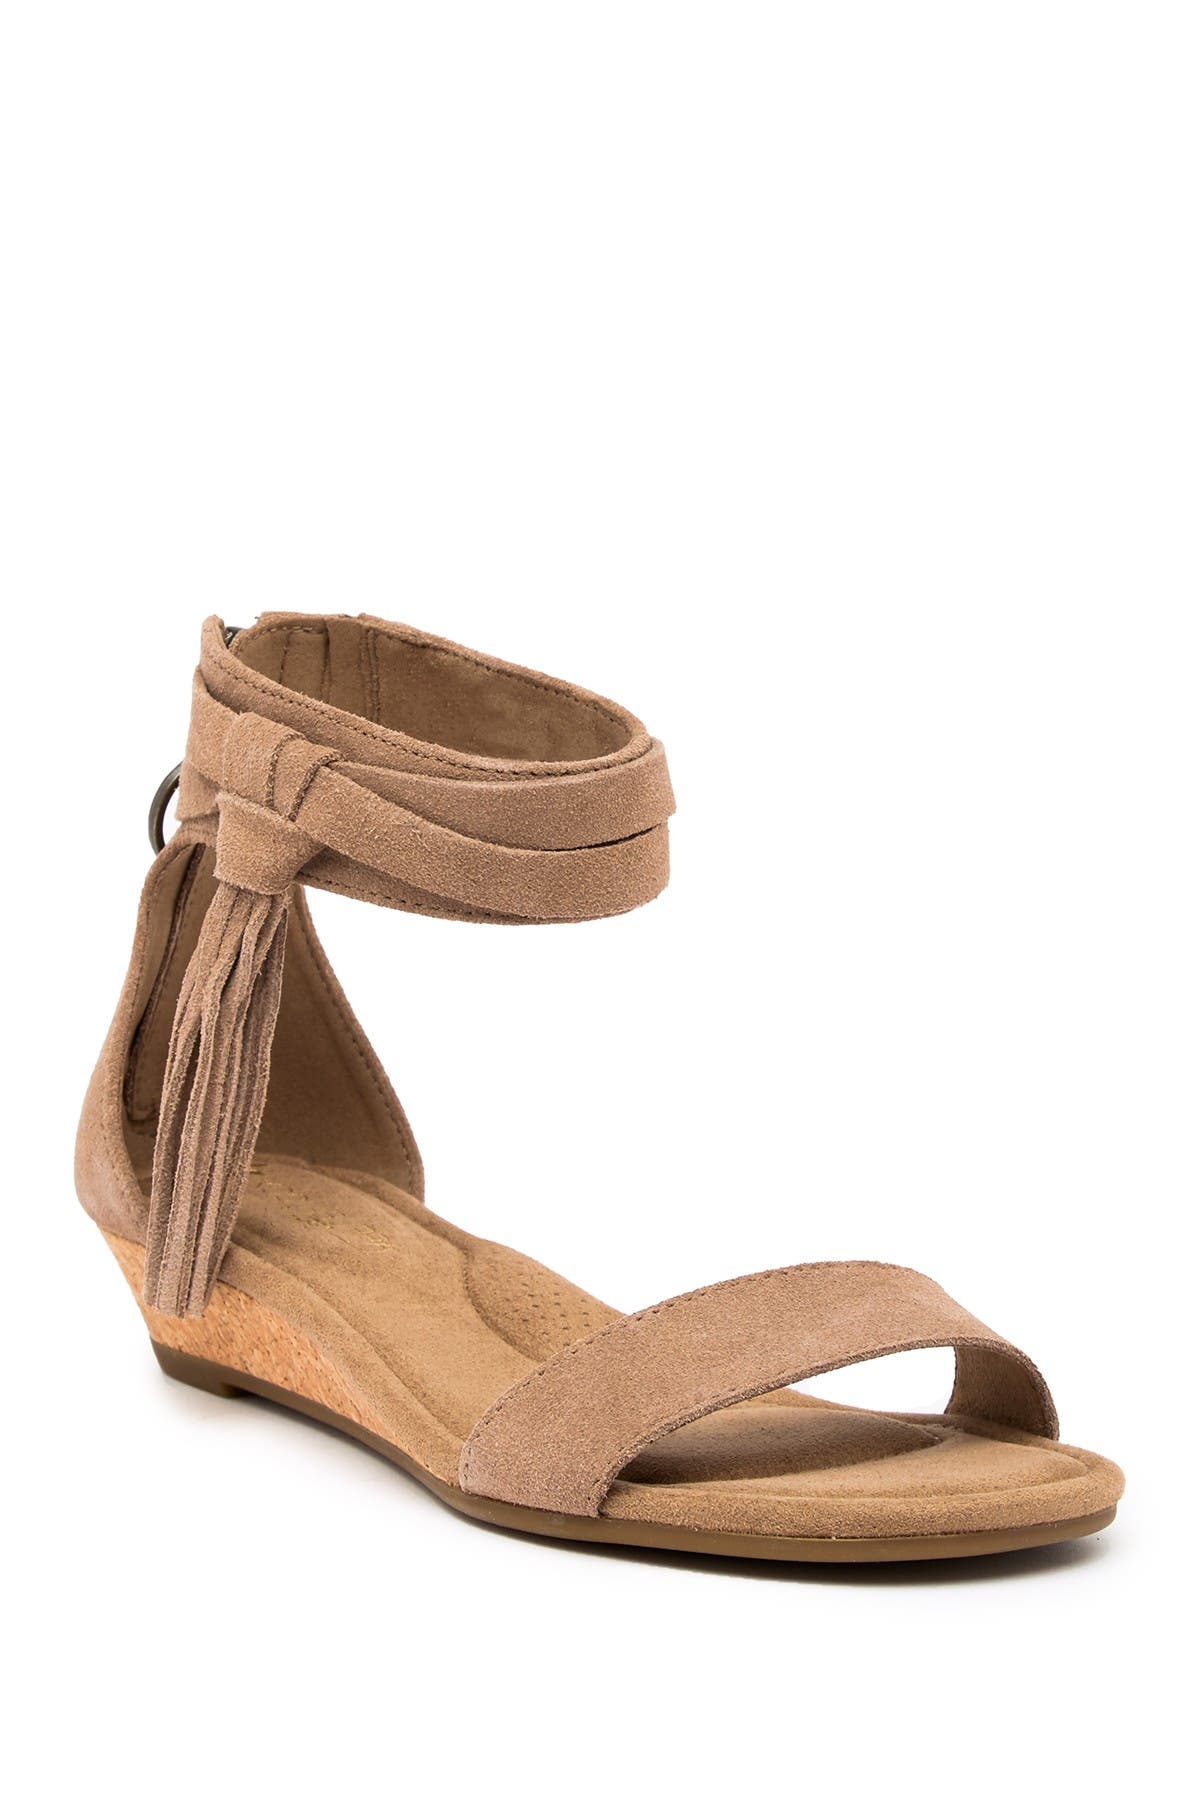 koolaburra fringe sandals